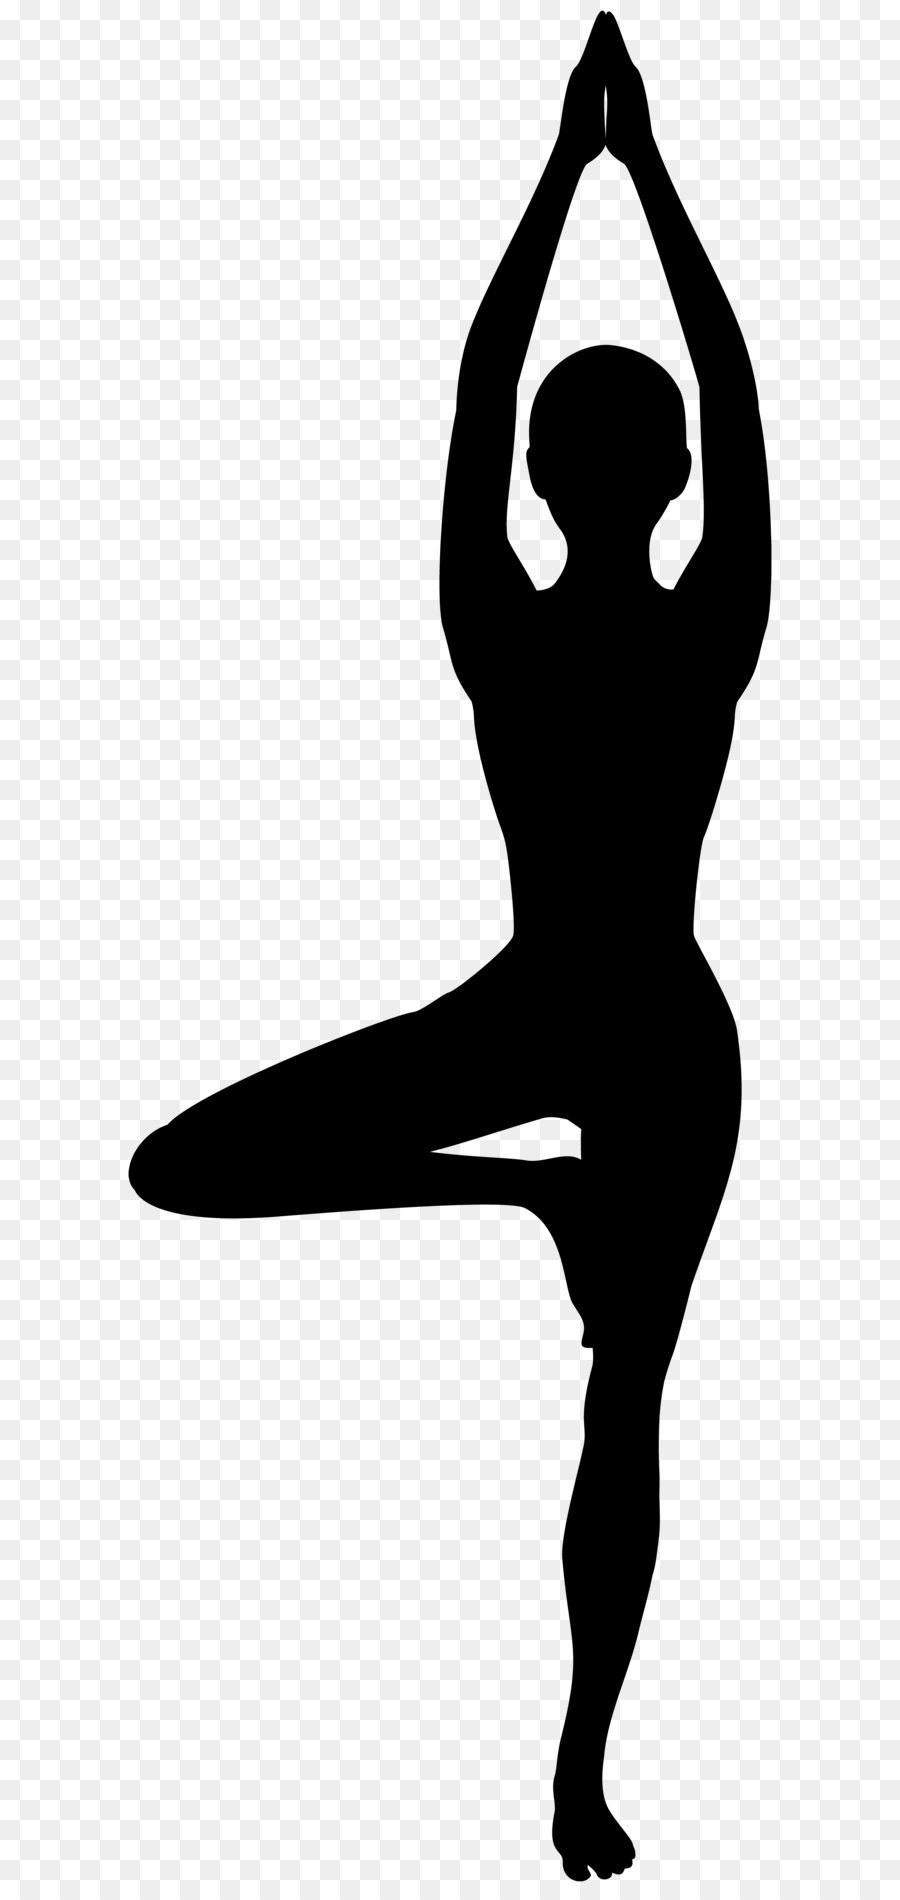 Cartoon woman doing yoga tree pose icon flat Vector Image